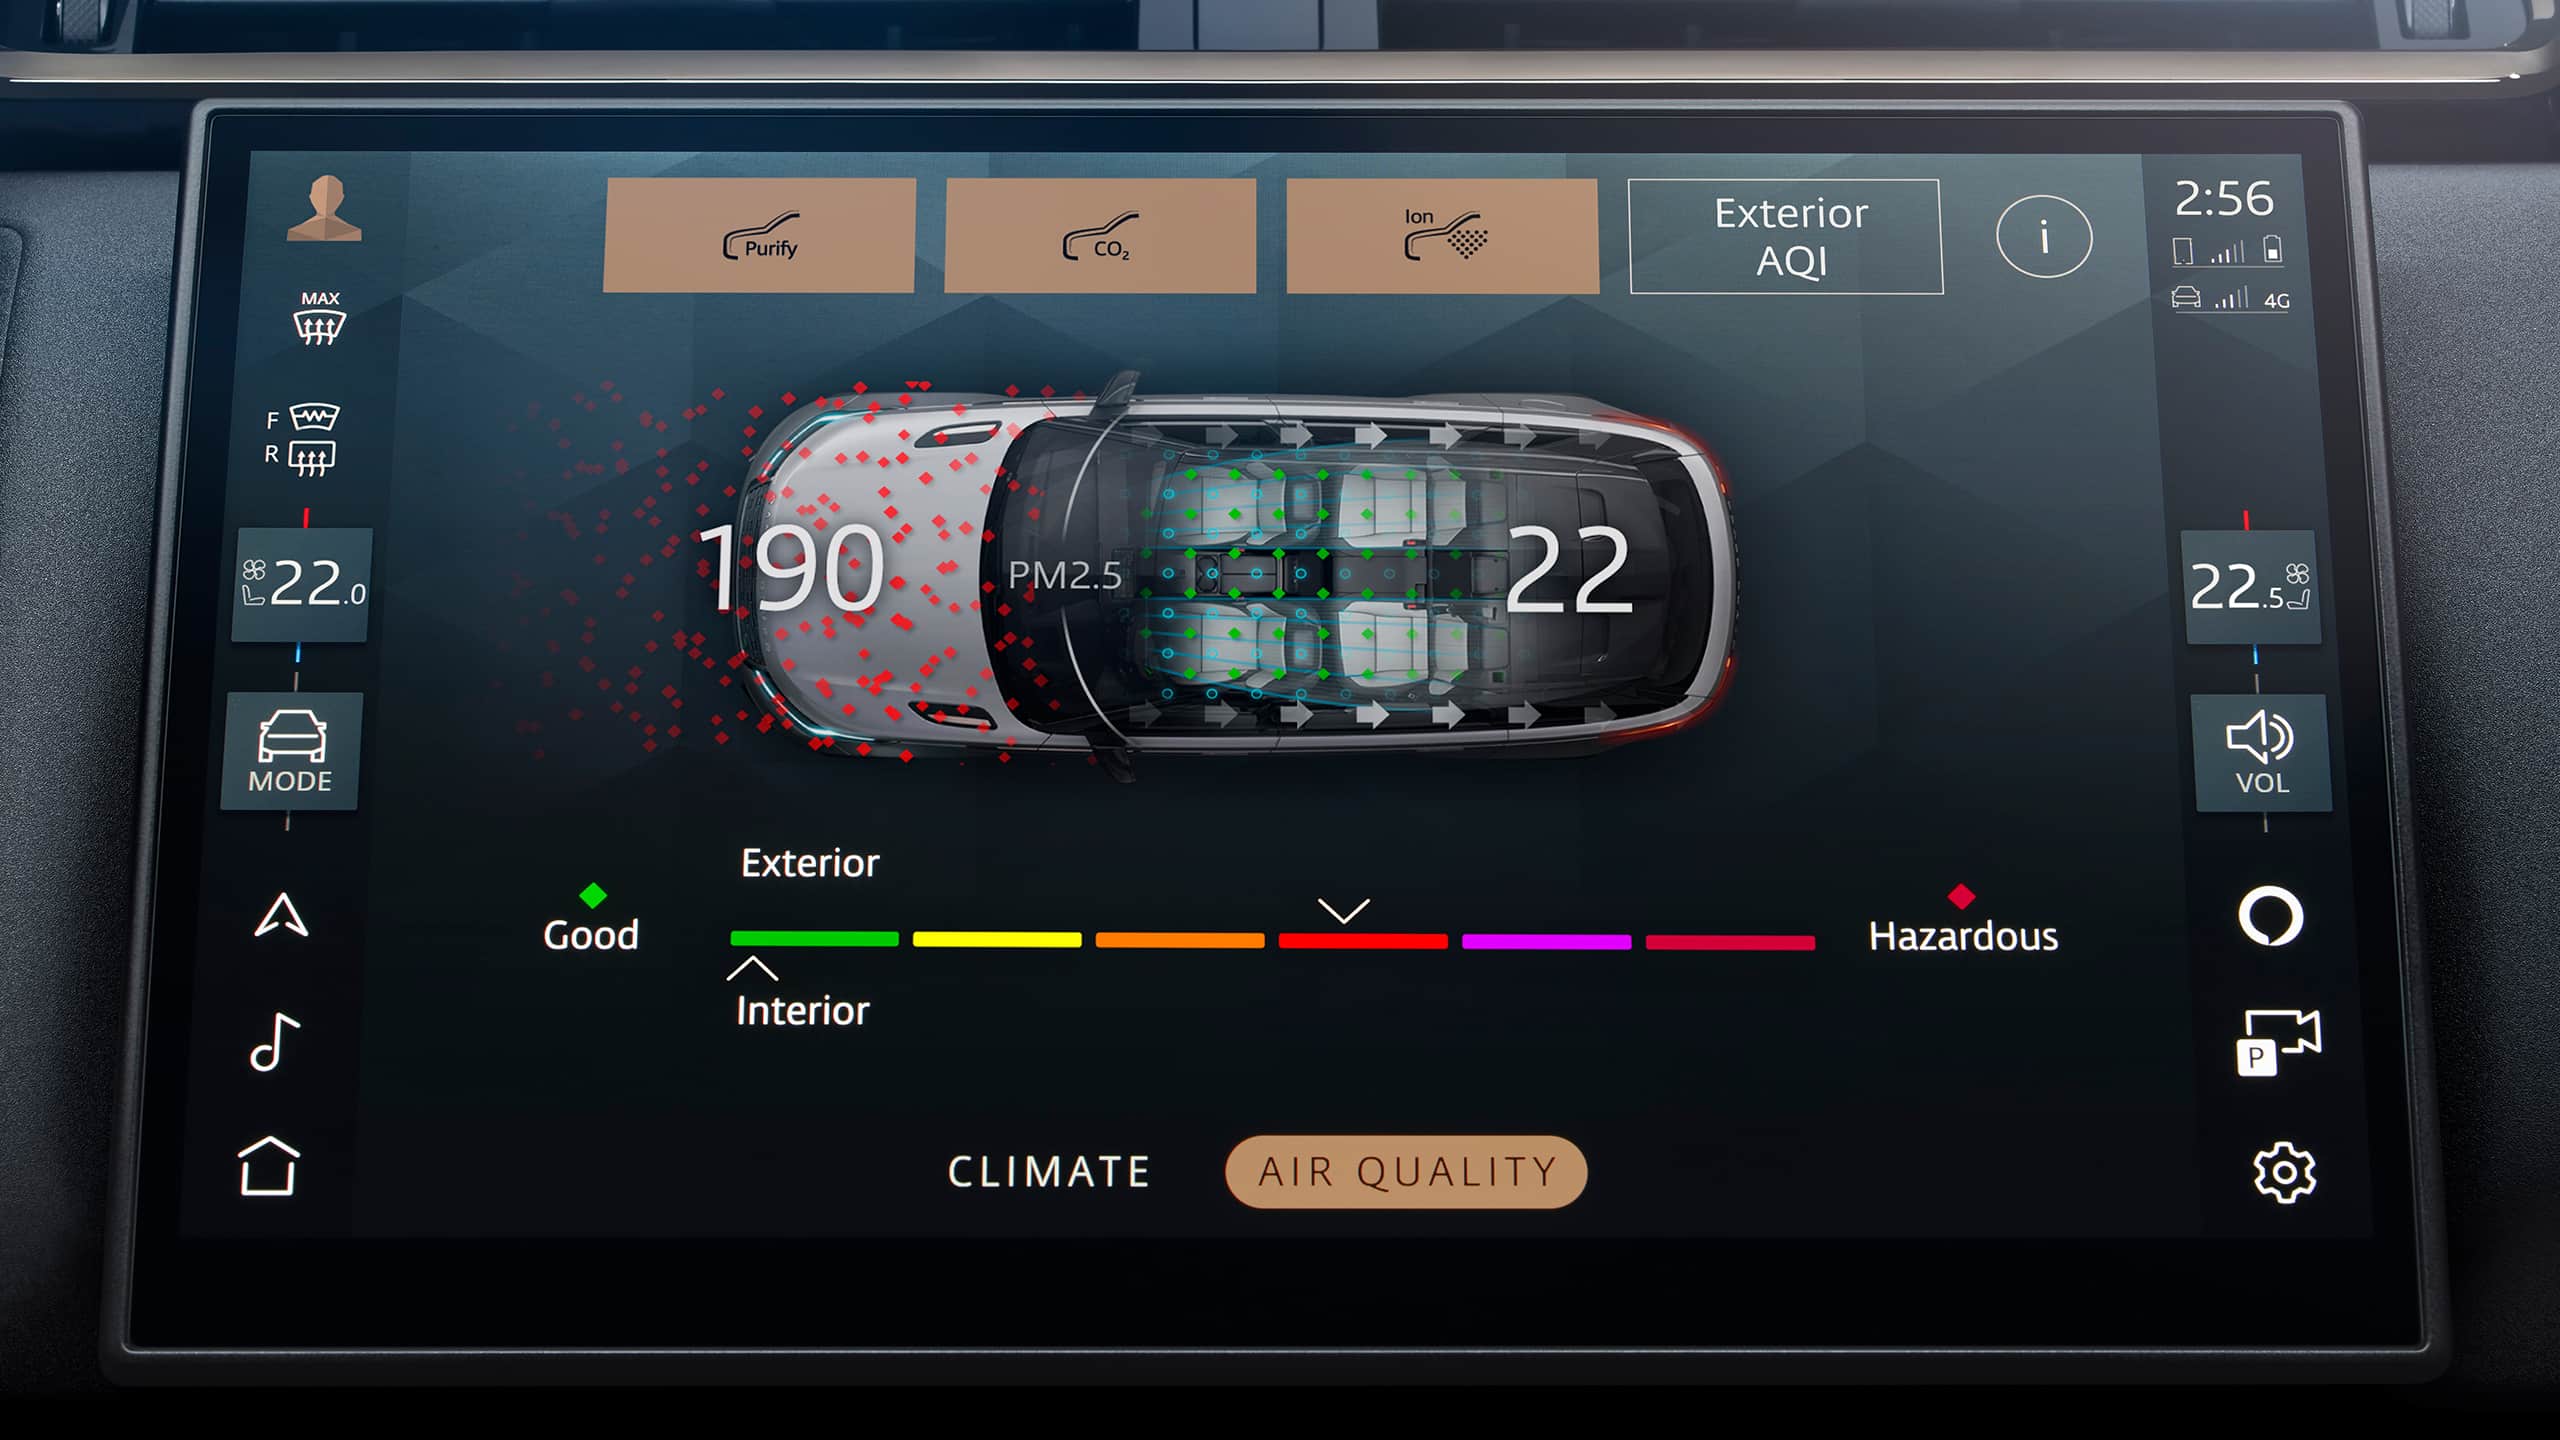 Range Rover Velar infotainment touch screen display